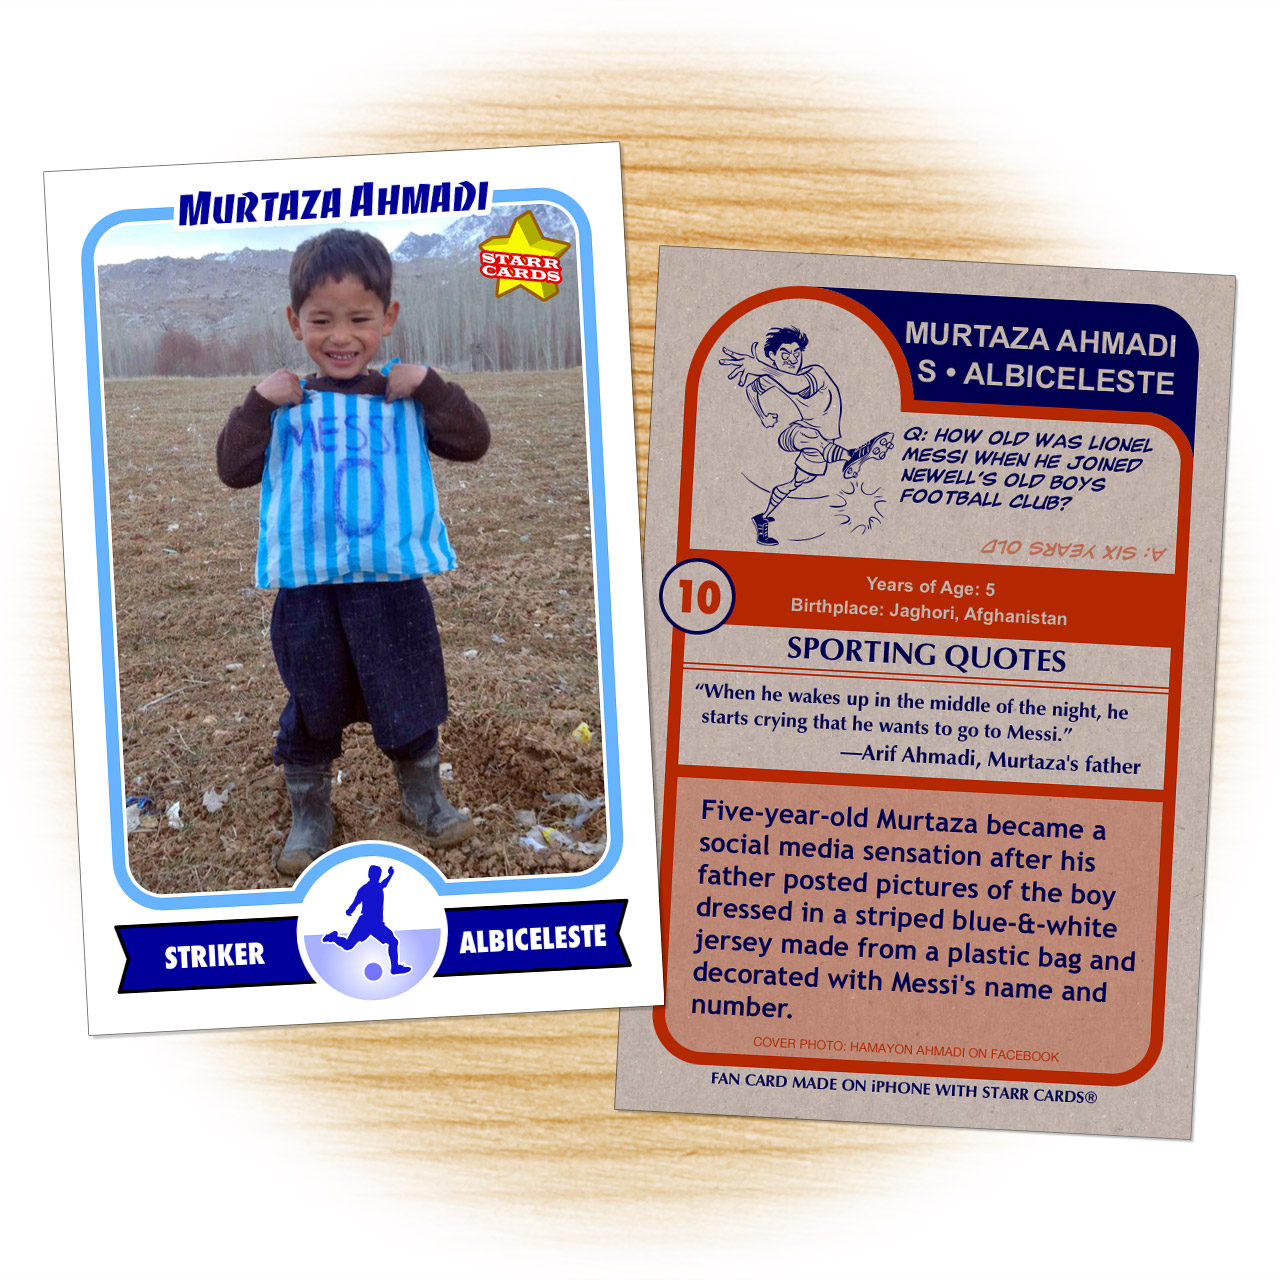 Murtaza Ahmadi fan card with Lionel Messi plastic-bag jersey